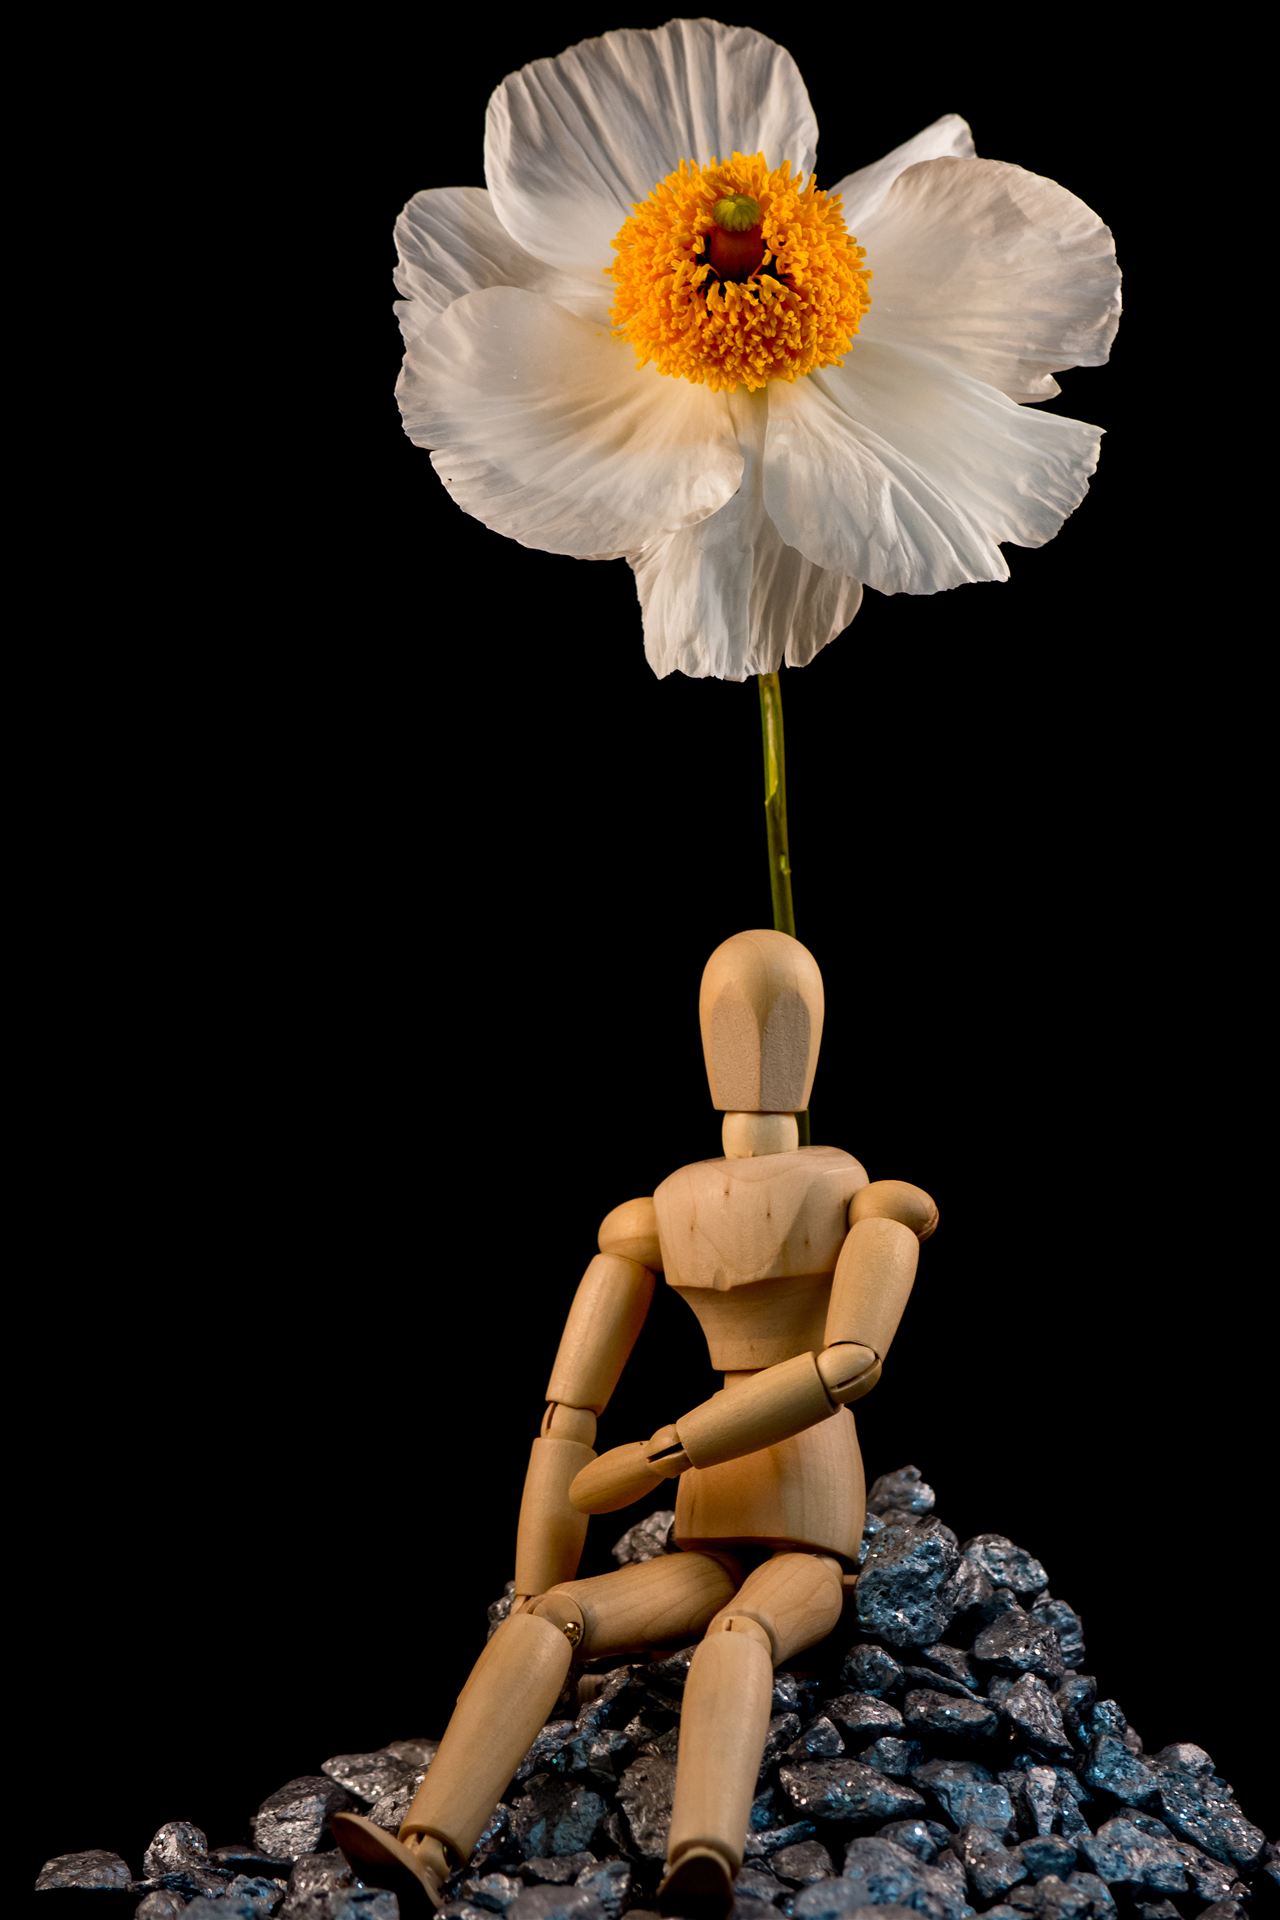 Artificial in Wonderland.jpg - Artie contemplates a life in wonderland where flowers speak by Sarah Williams